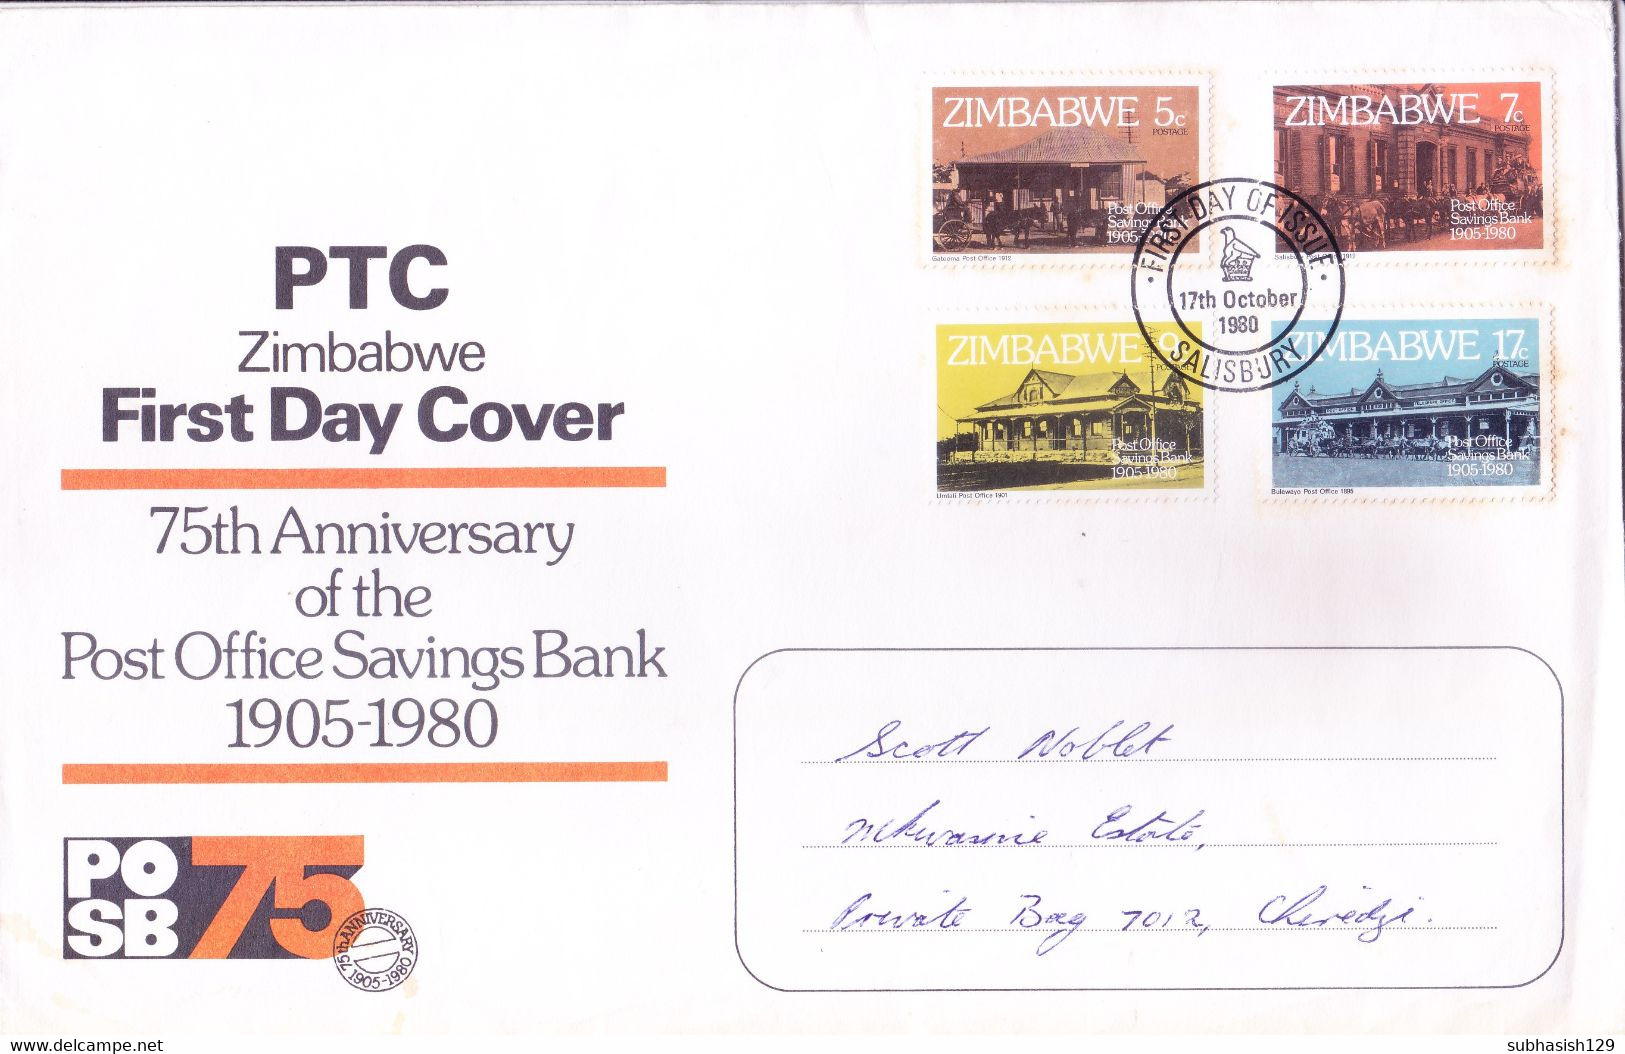 ZIMBABWE : FIRST DAY COVER : 17 OCTOBER 1980: 75TH ANNIVERSARY OF POST OFFICE SAVINGS BANK - Zambèze